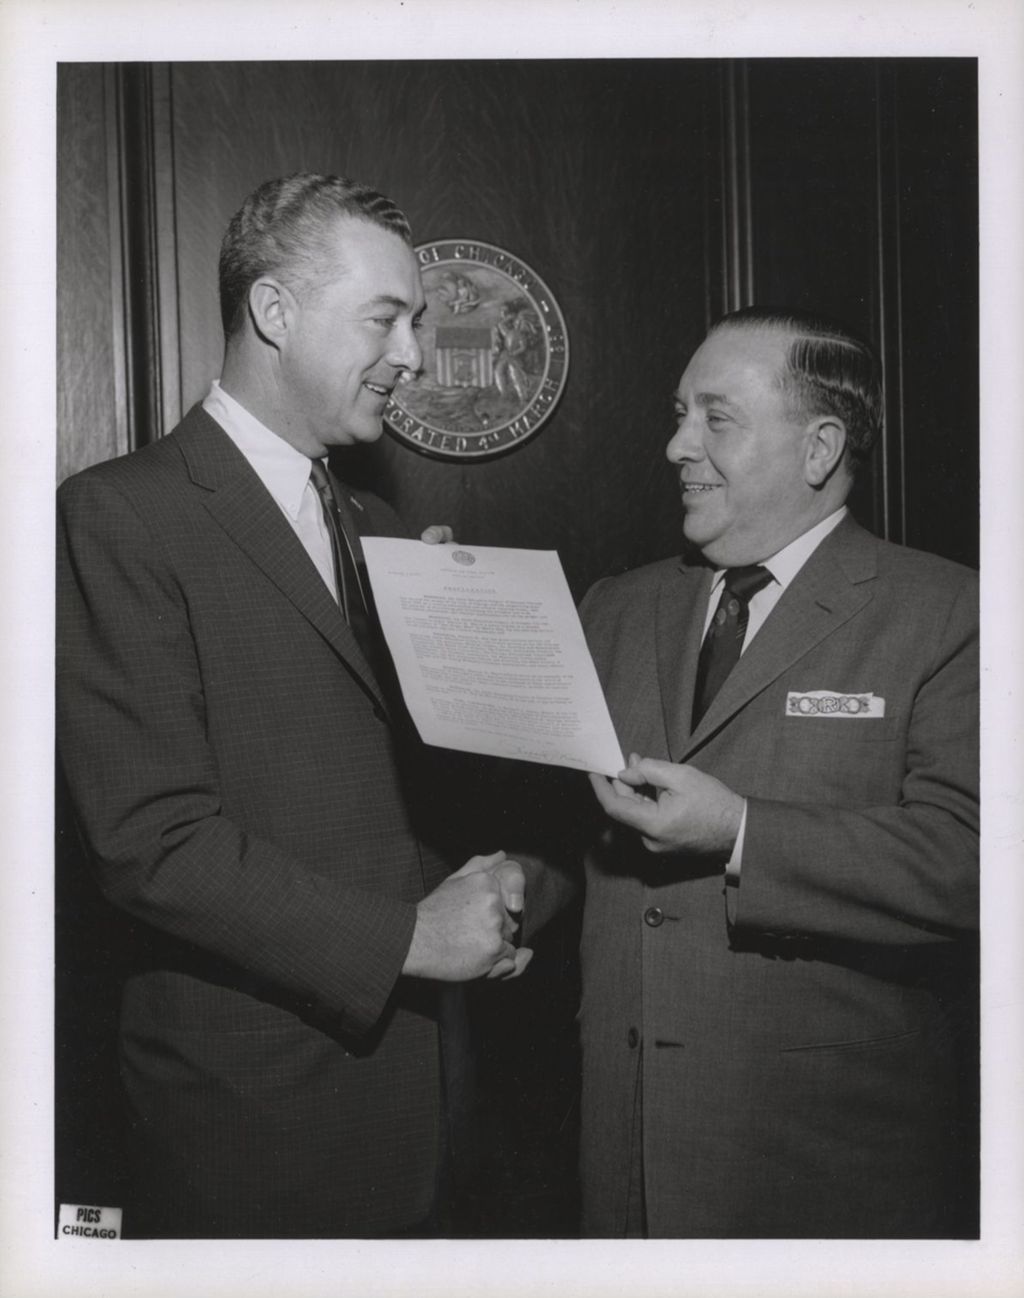 Richard J. Daley presenting a mayoral proclamation to a man